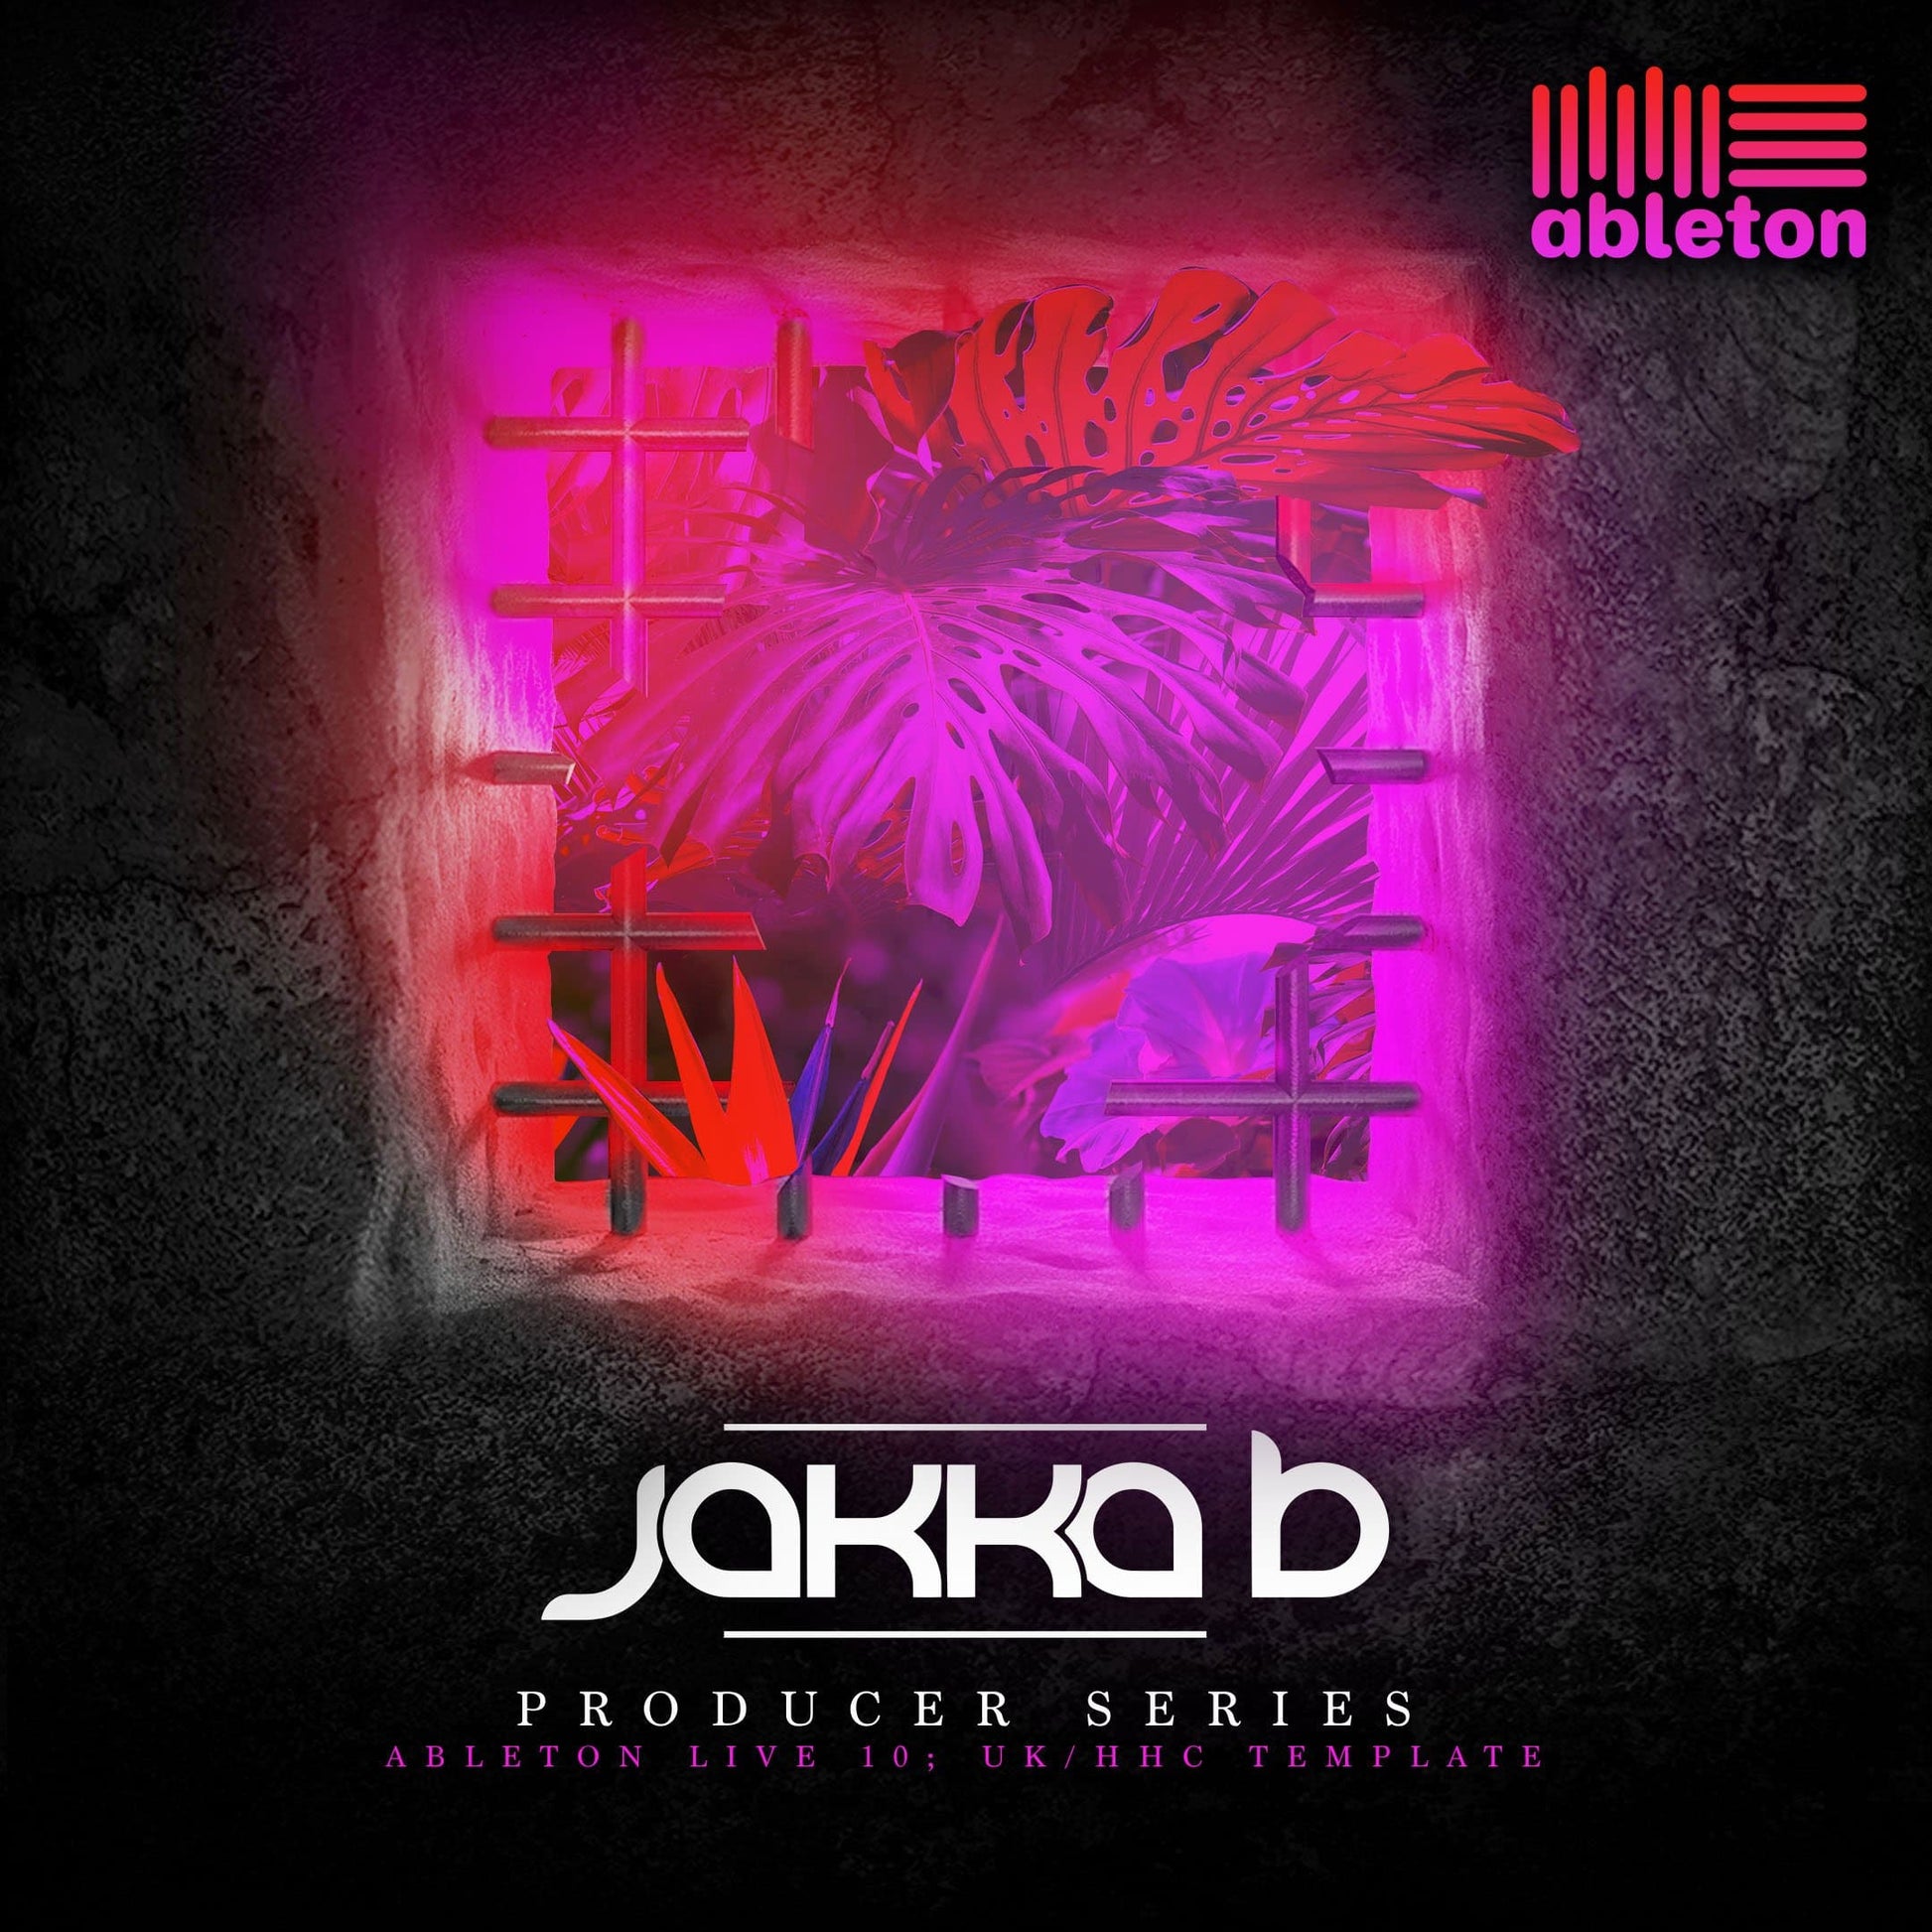 Jakka-B Producer Series; UK Happy Hardcore Ableton 10 template - Rewired Records